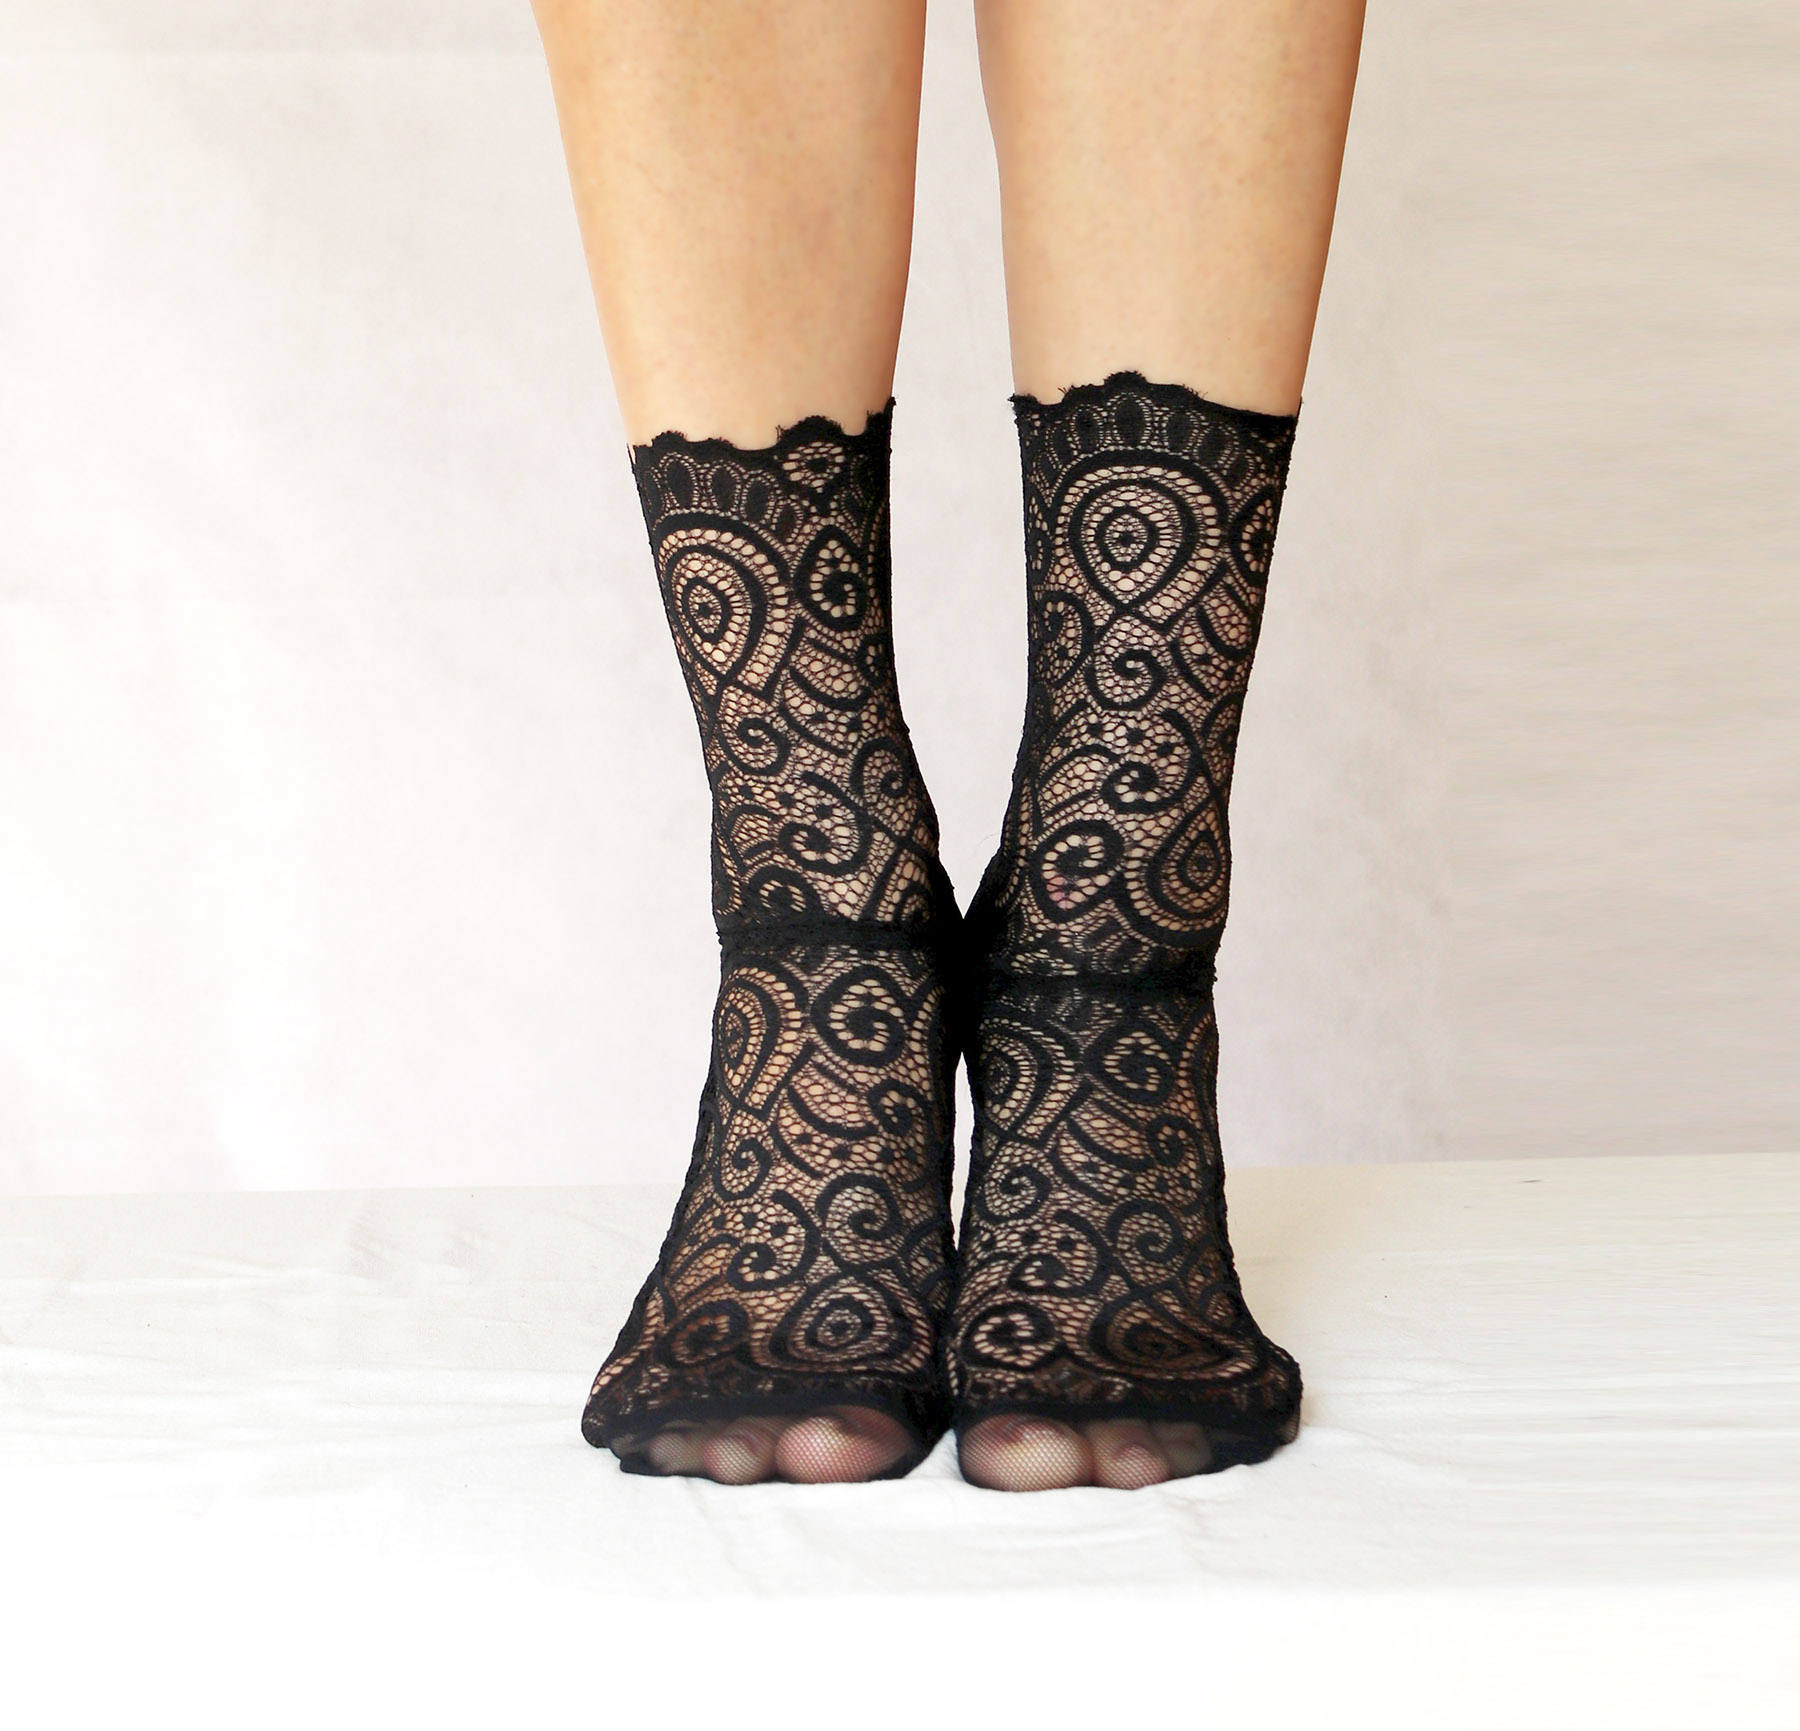 Black Lace Socks. Scalloped Edge Lace and Mesh socks. Handmade | Etsy